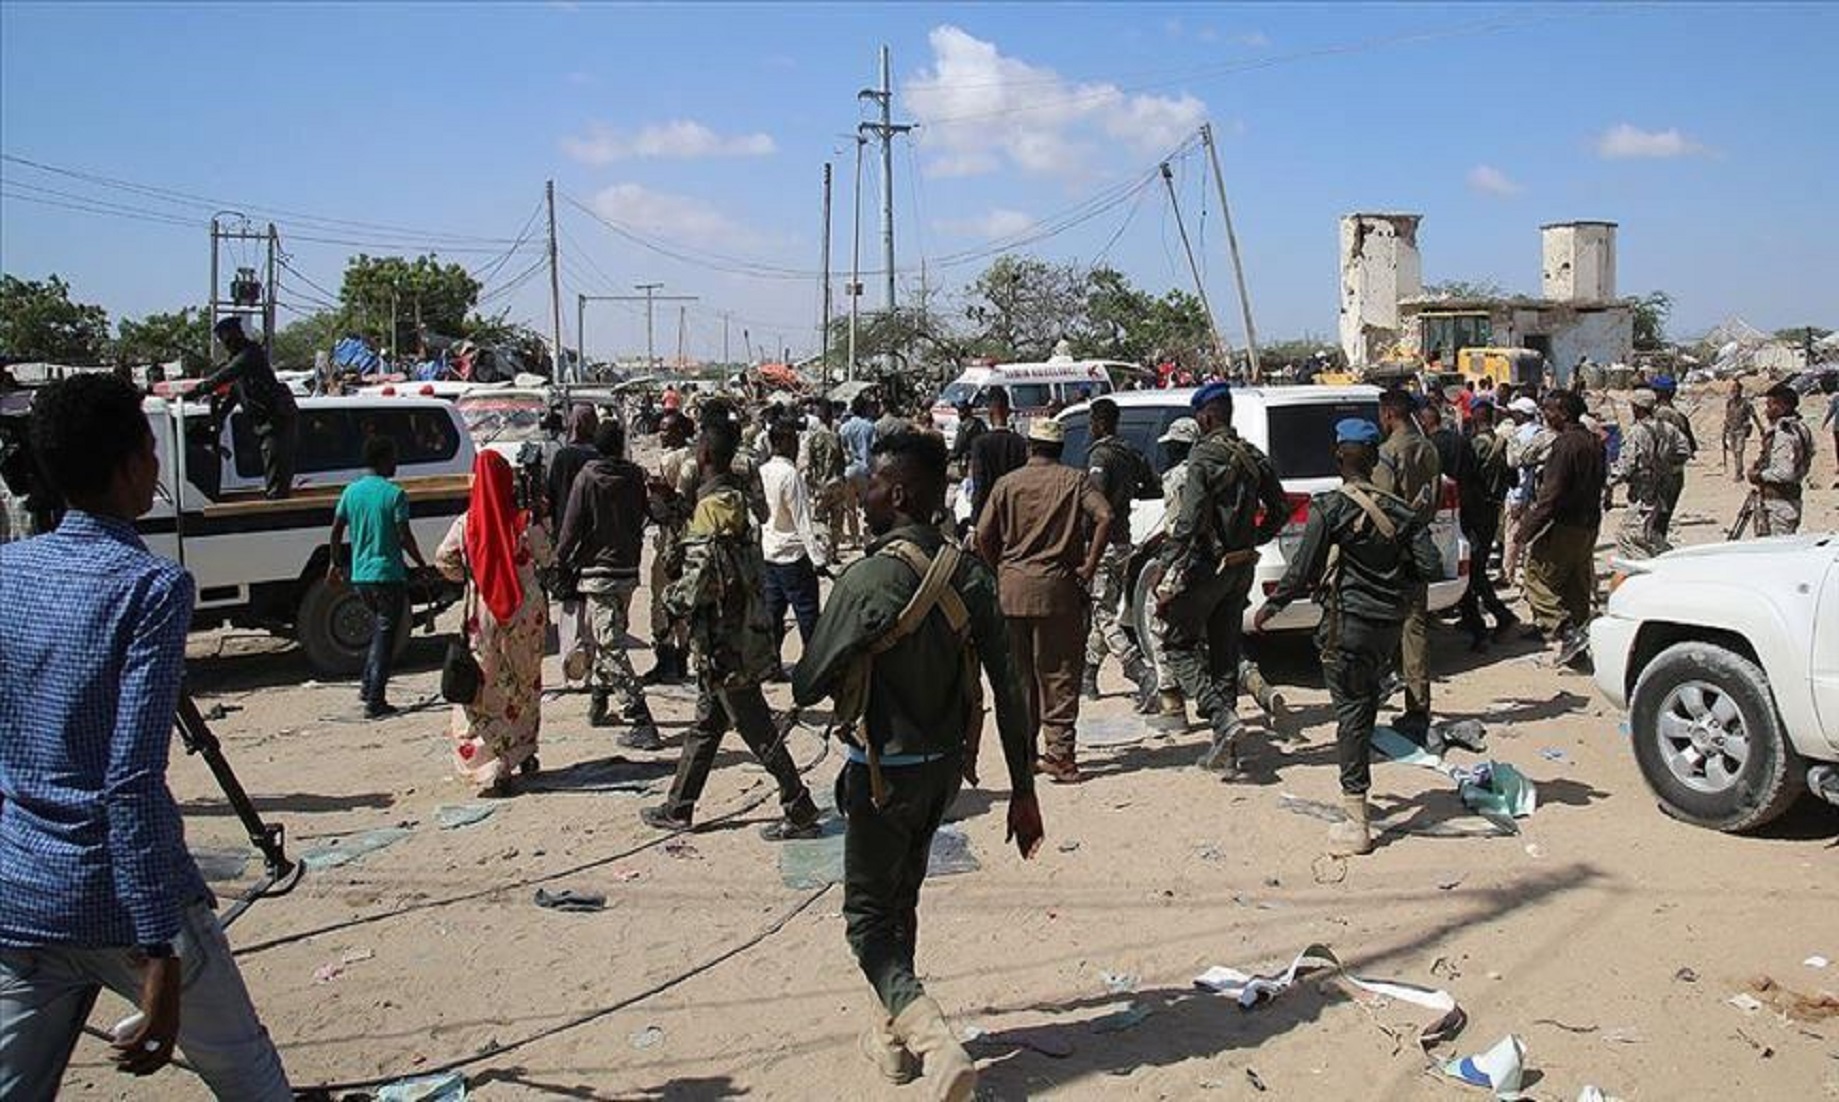 Turkey evacuate wounded after deadly Mogadishu blast